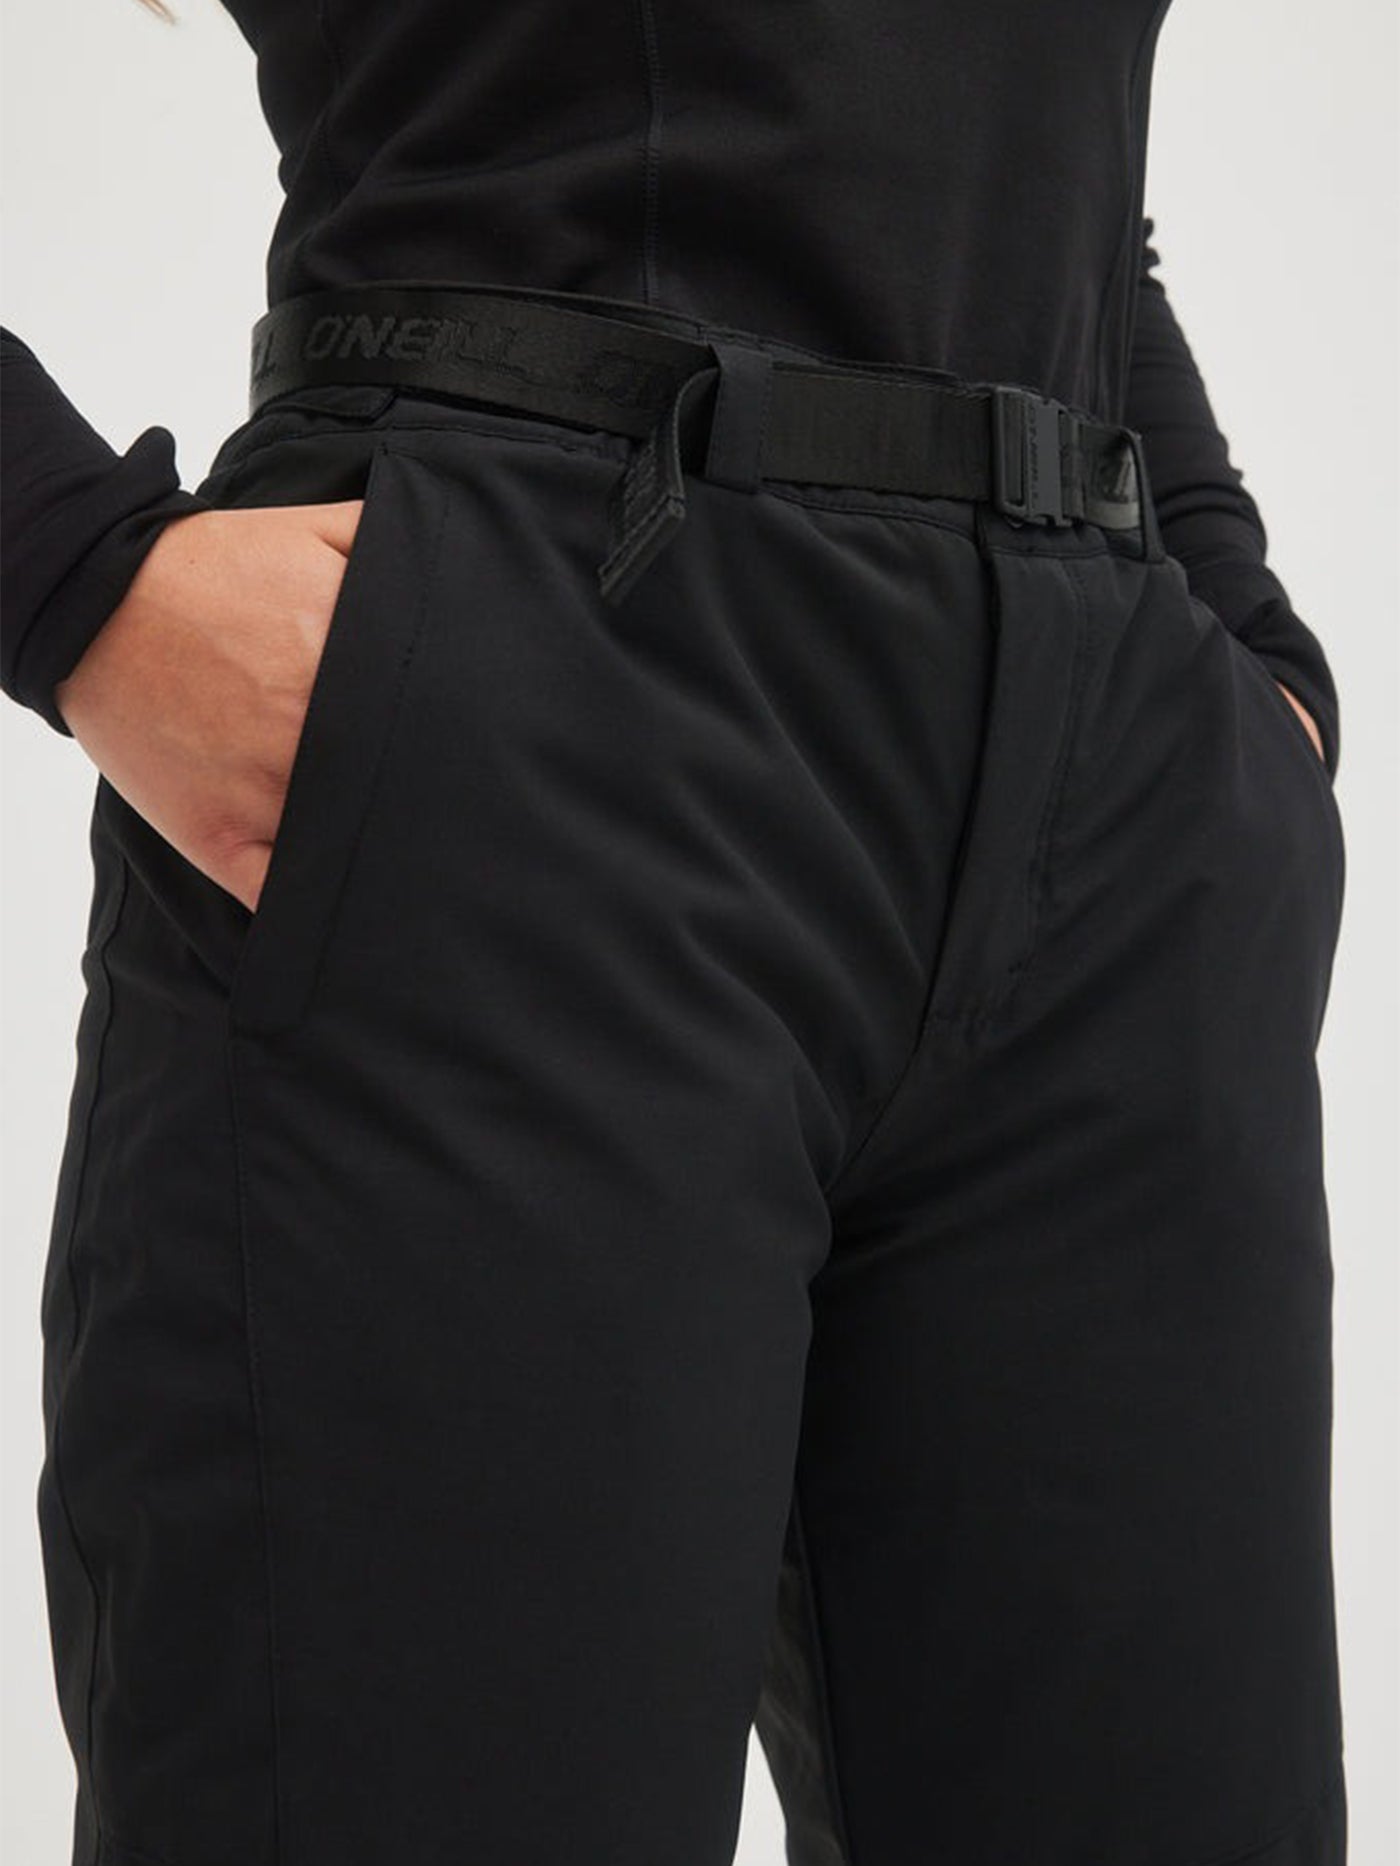 O'neill Star Insulated Pants Women's- Blackout